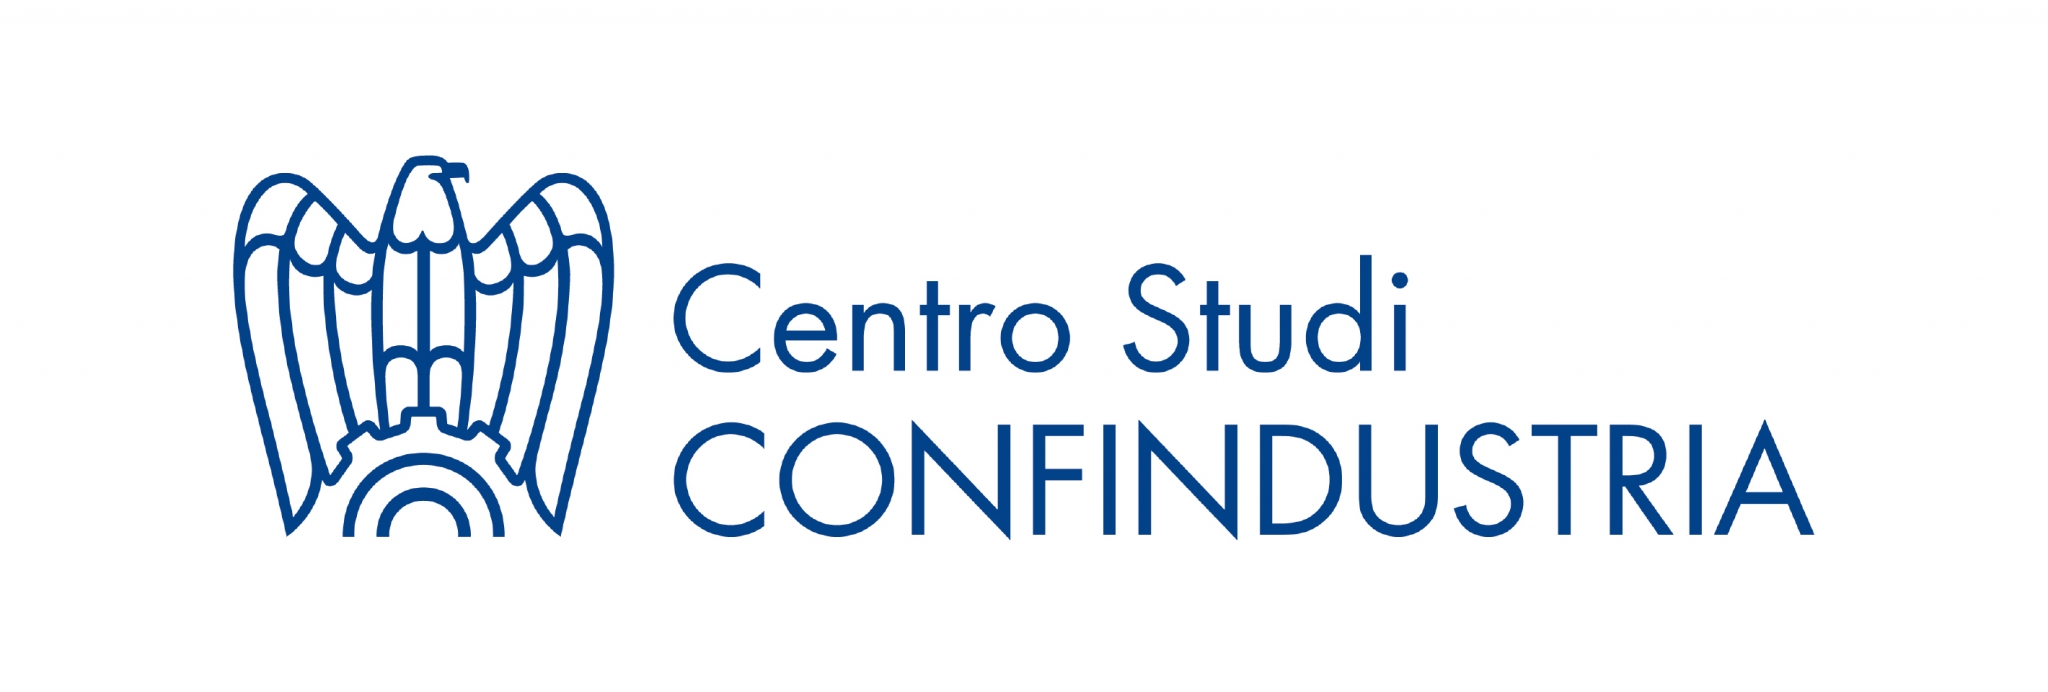 Centro Studi Confindustria,